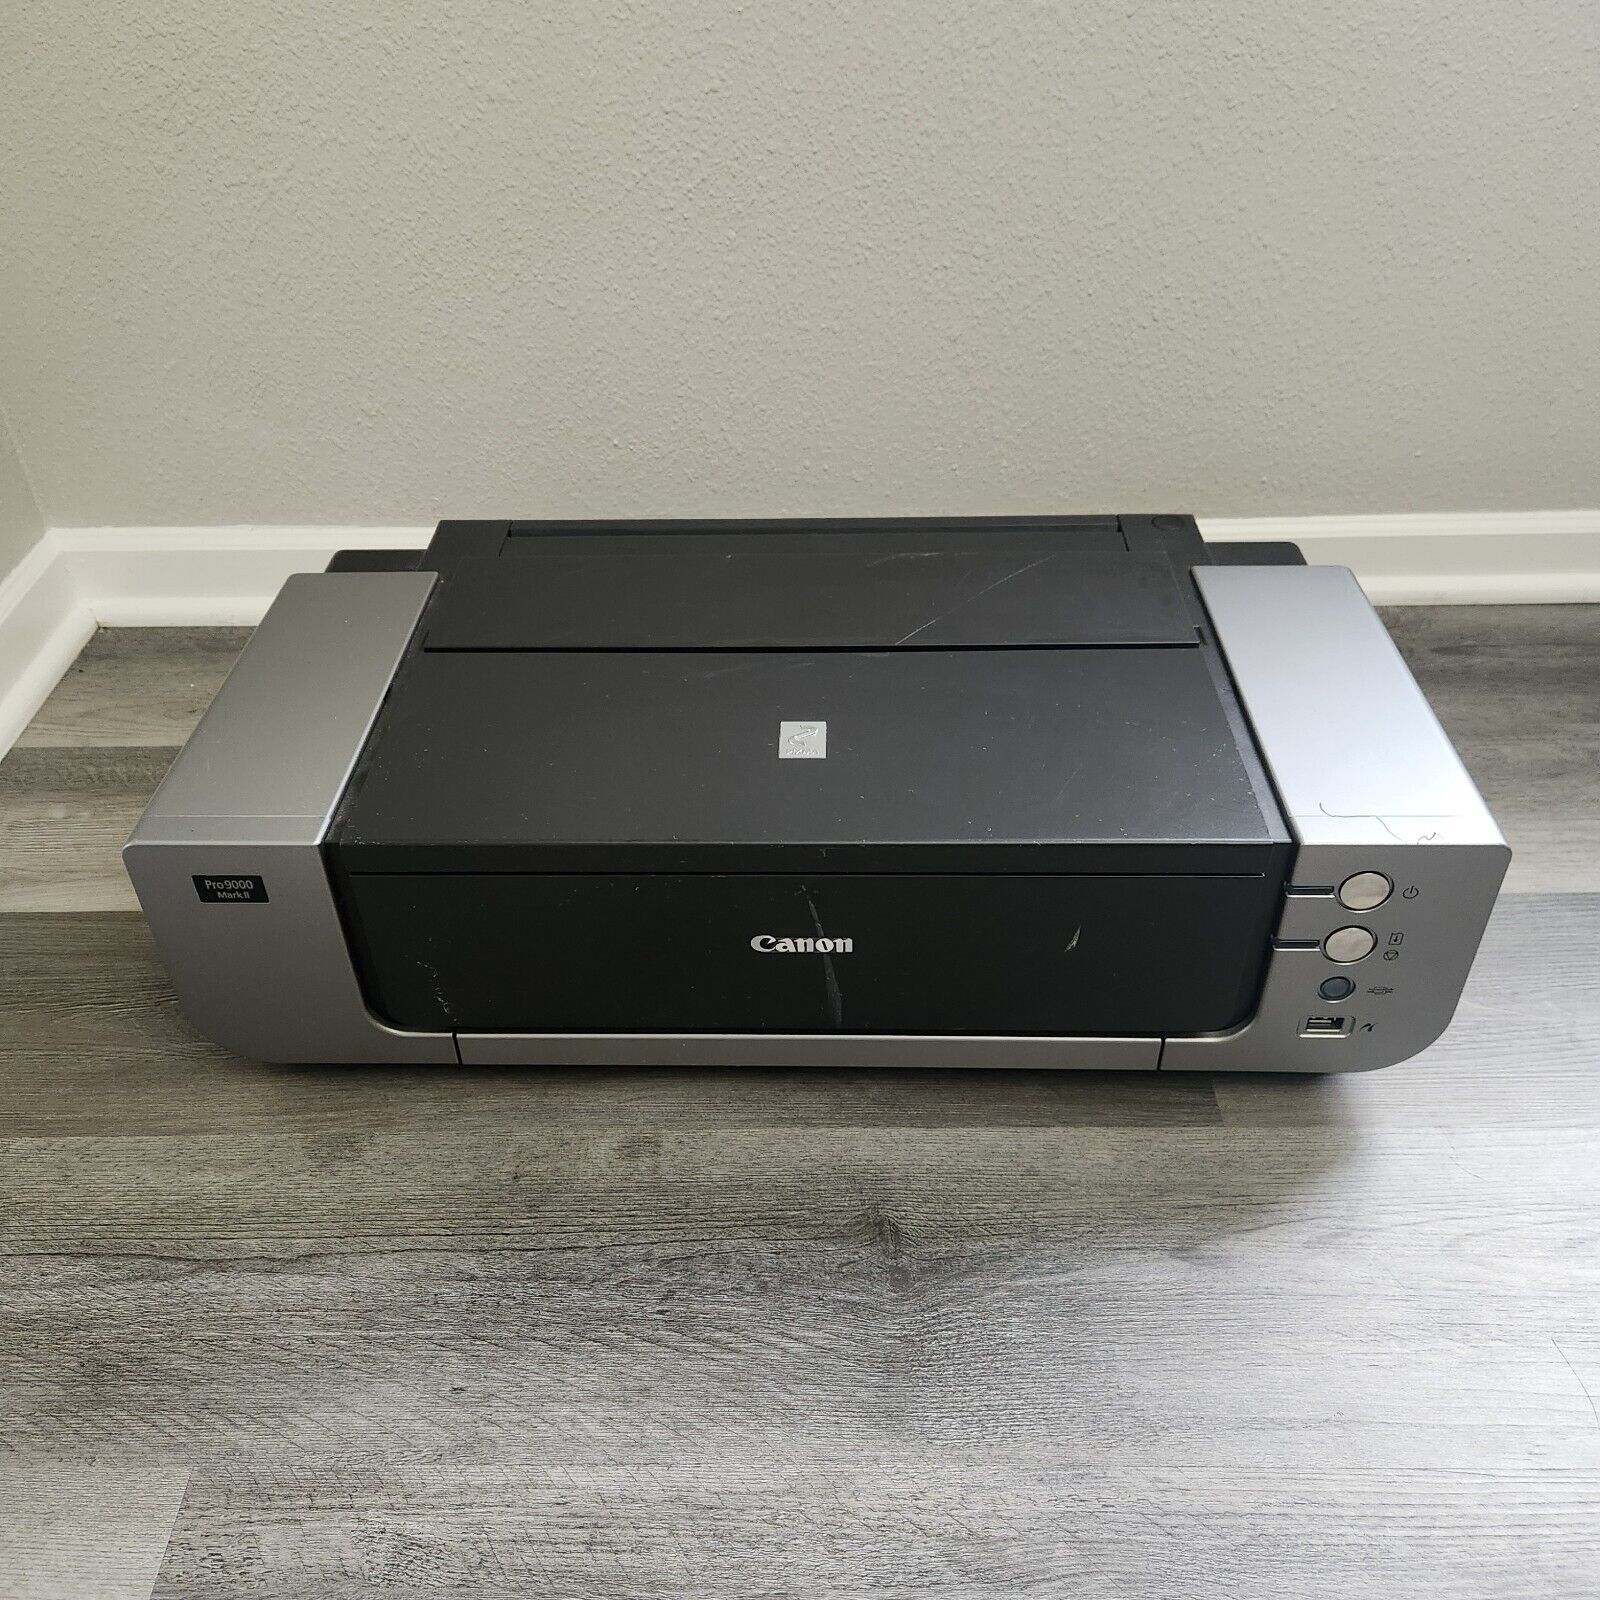 Canon PIXMA Pro9000 MARK II Professional Inkjet Photo Printer - Untested